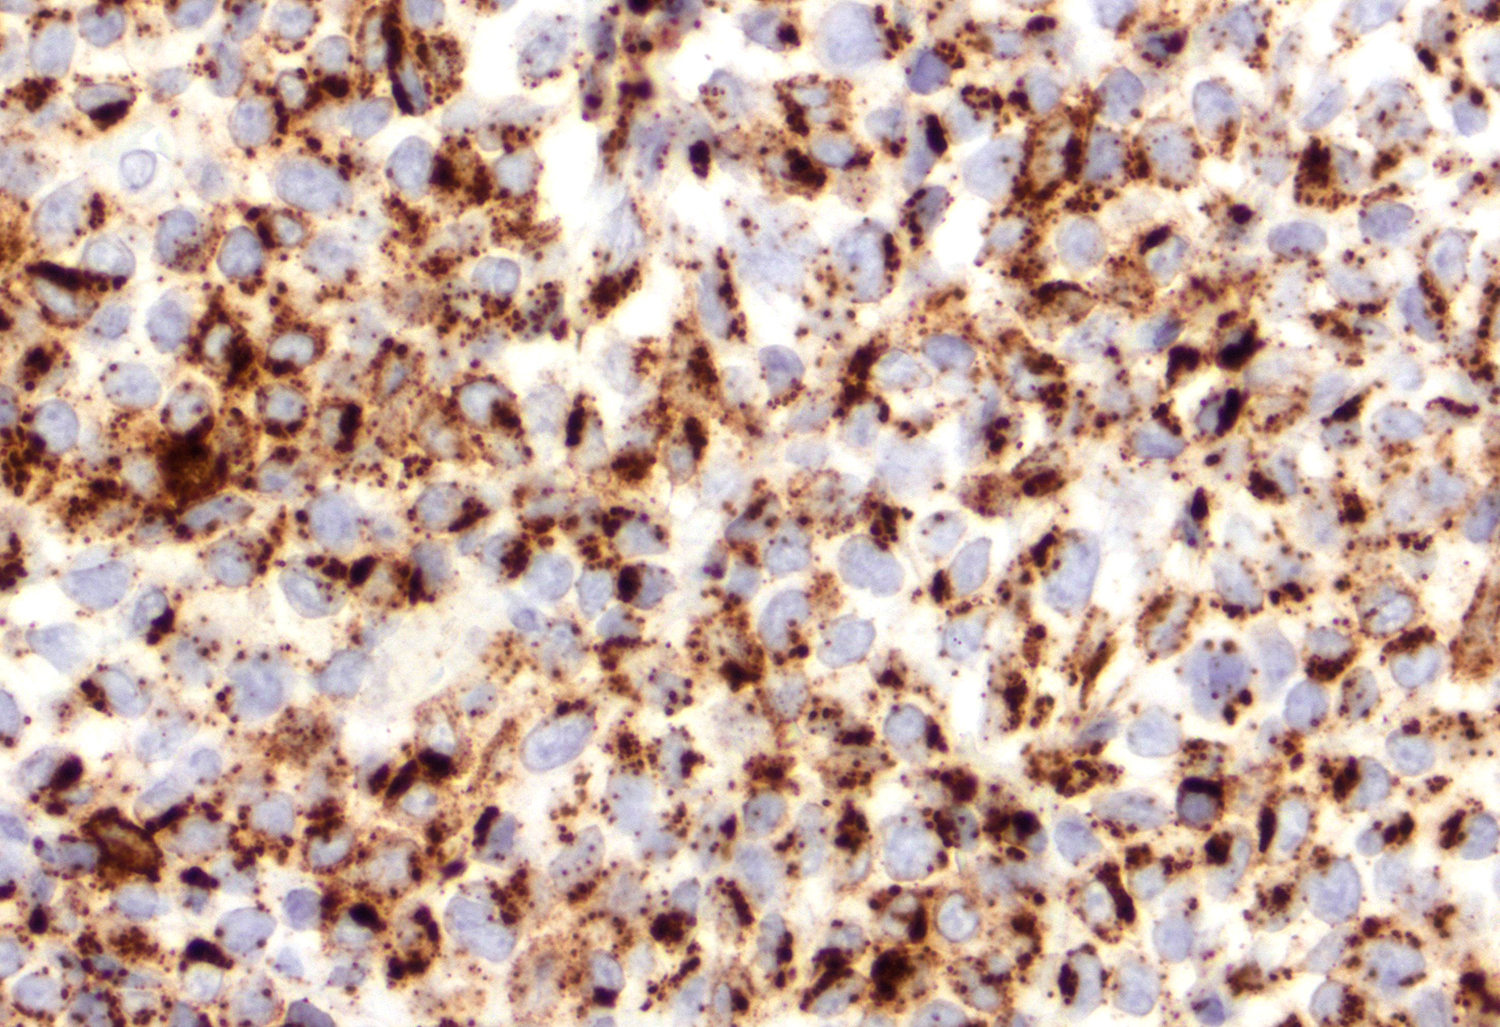 TIA1 positivity of lymphoma cells 